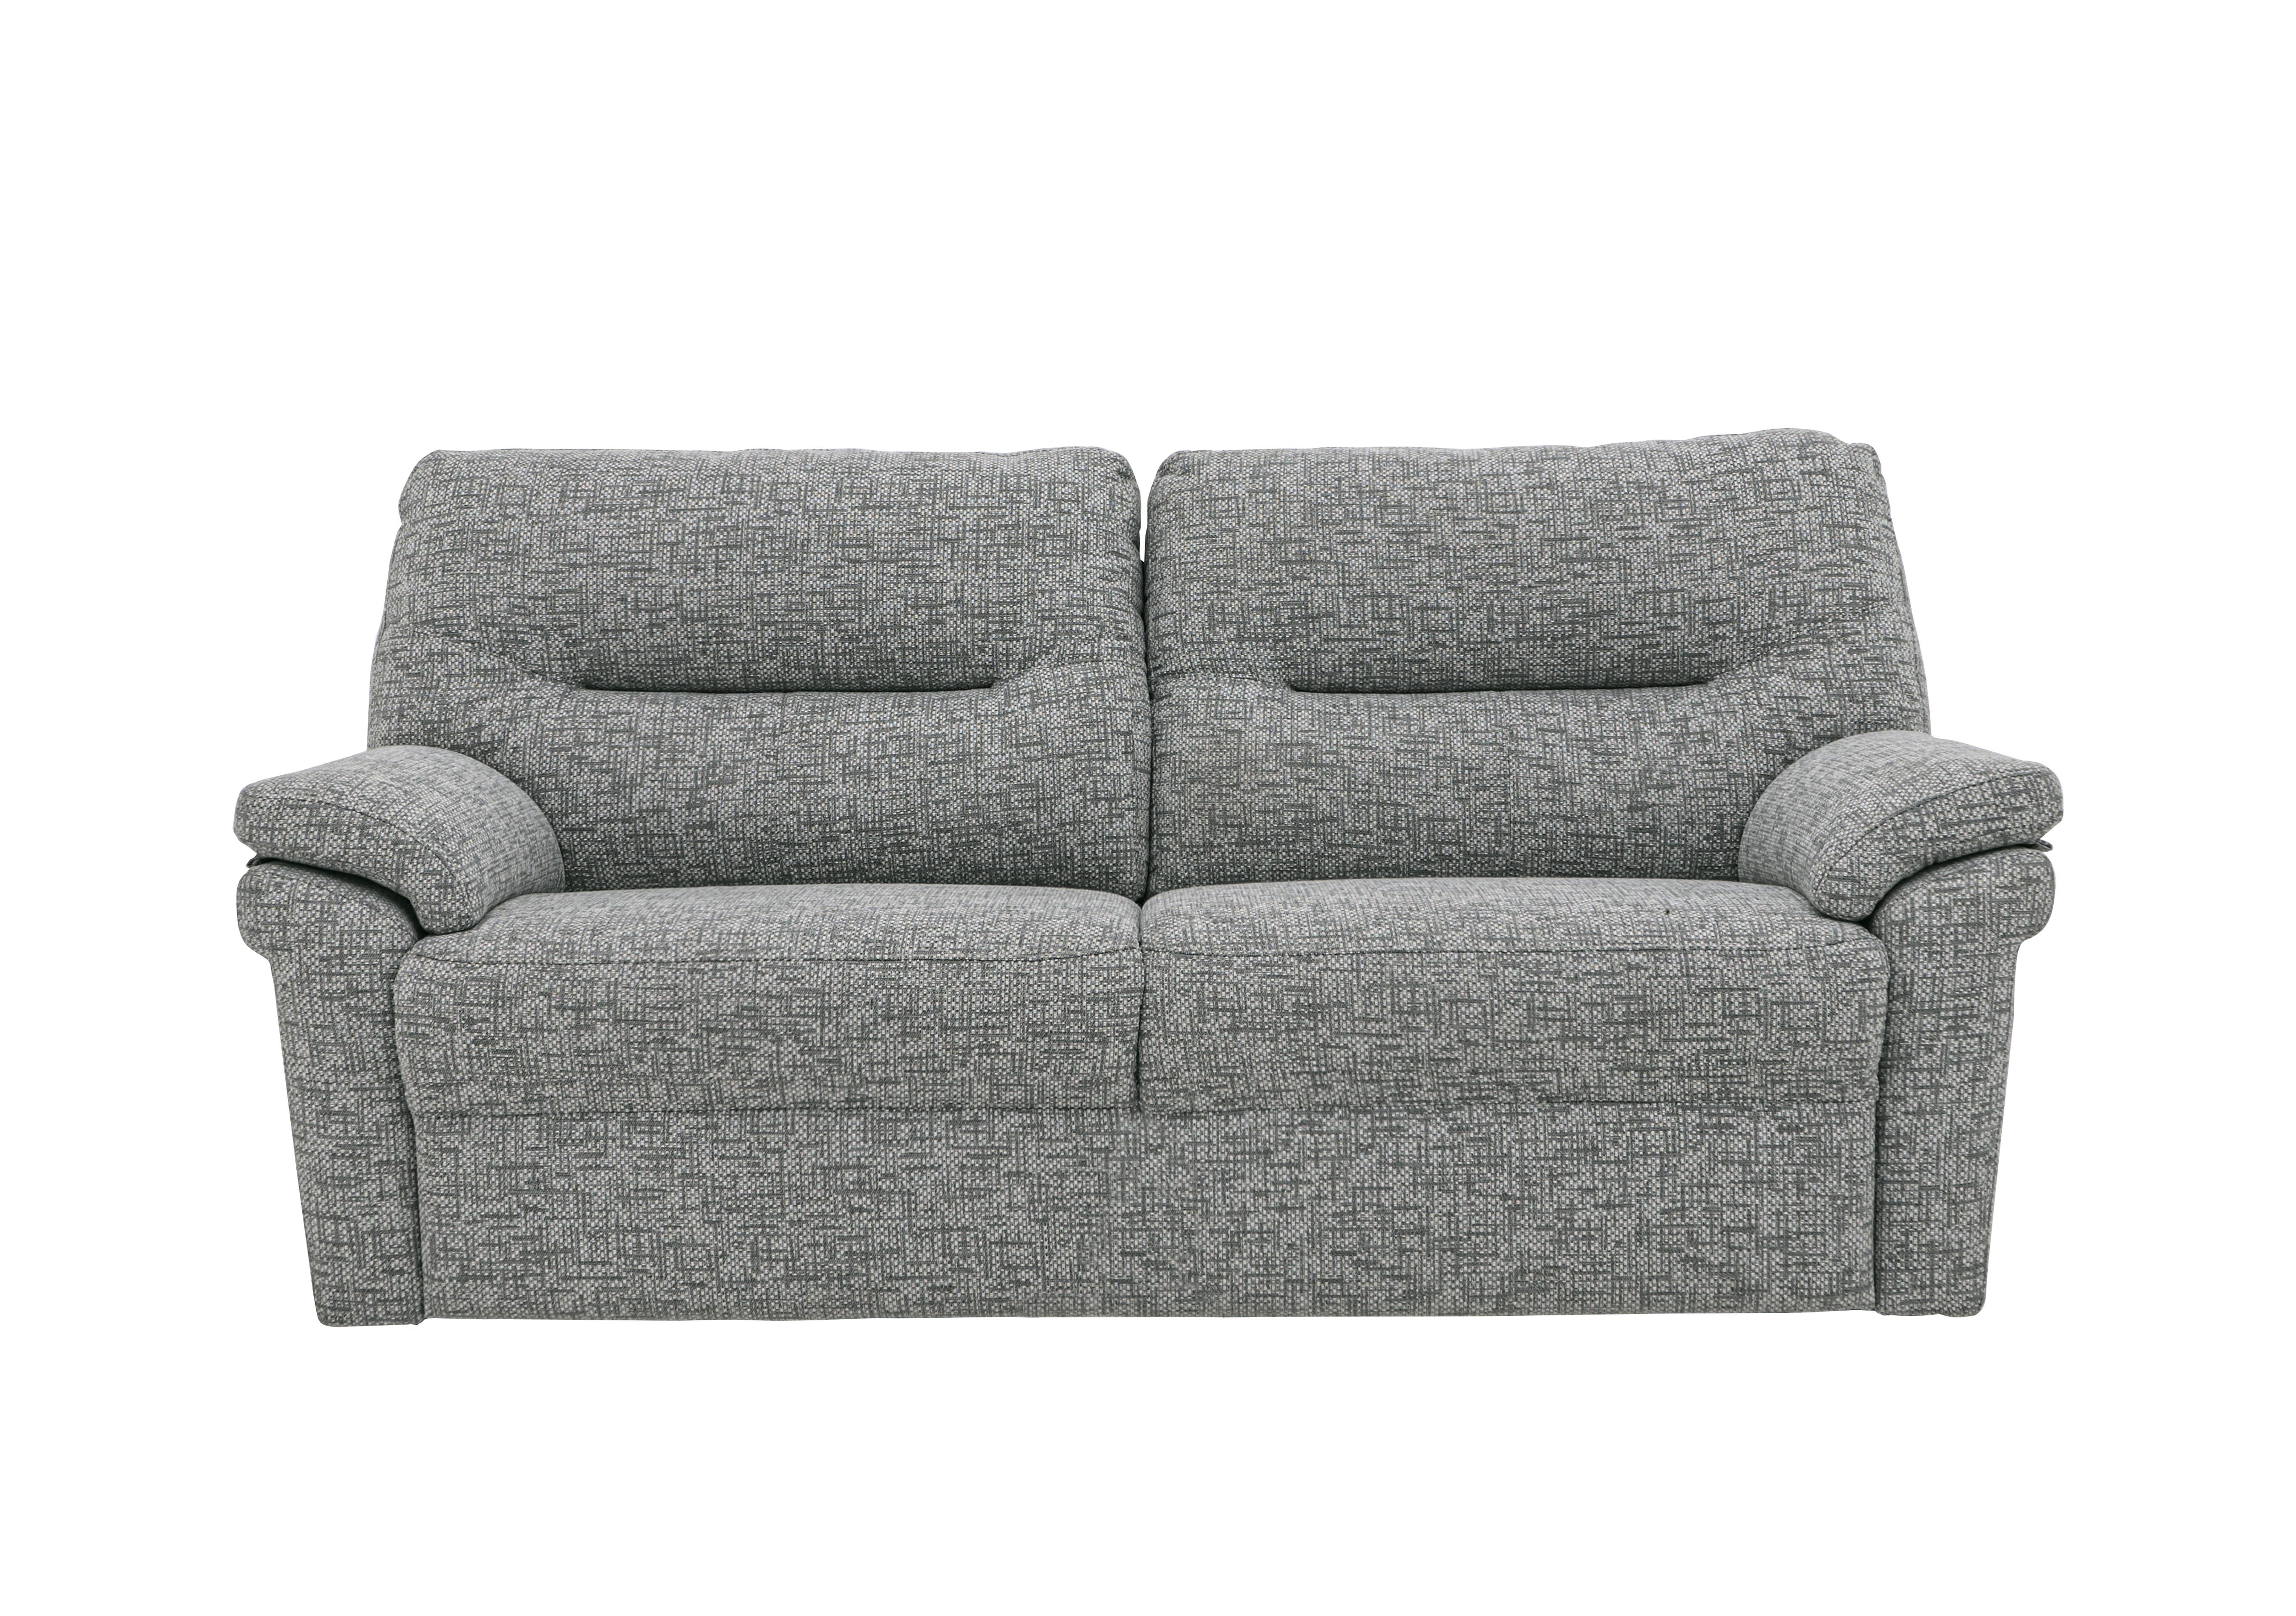 Seattle 3 Seater Fabric Sofa in B030 Remco Light Grey on Furniture Village